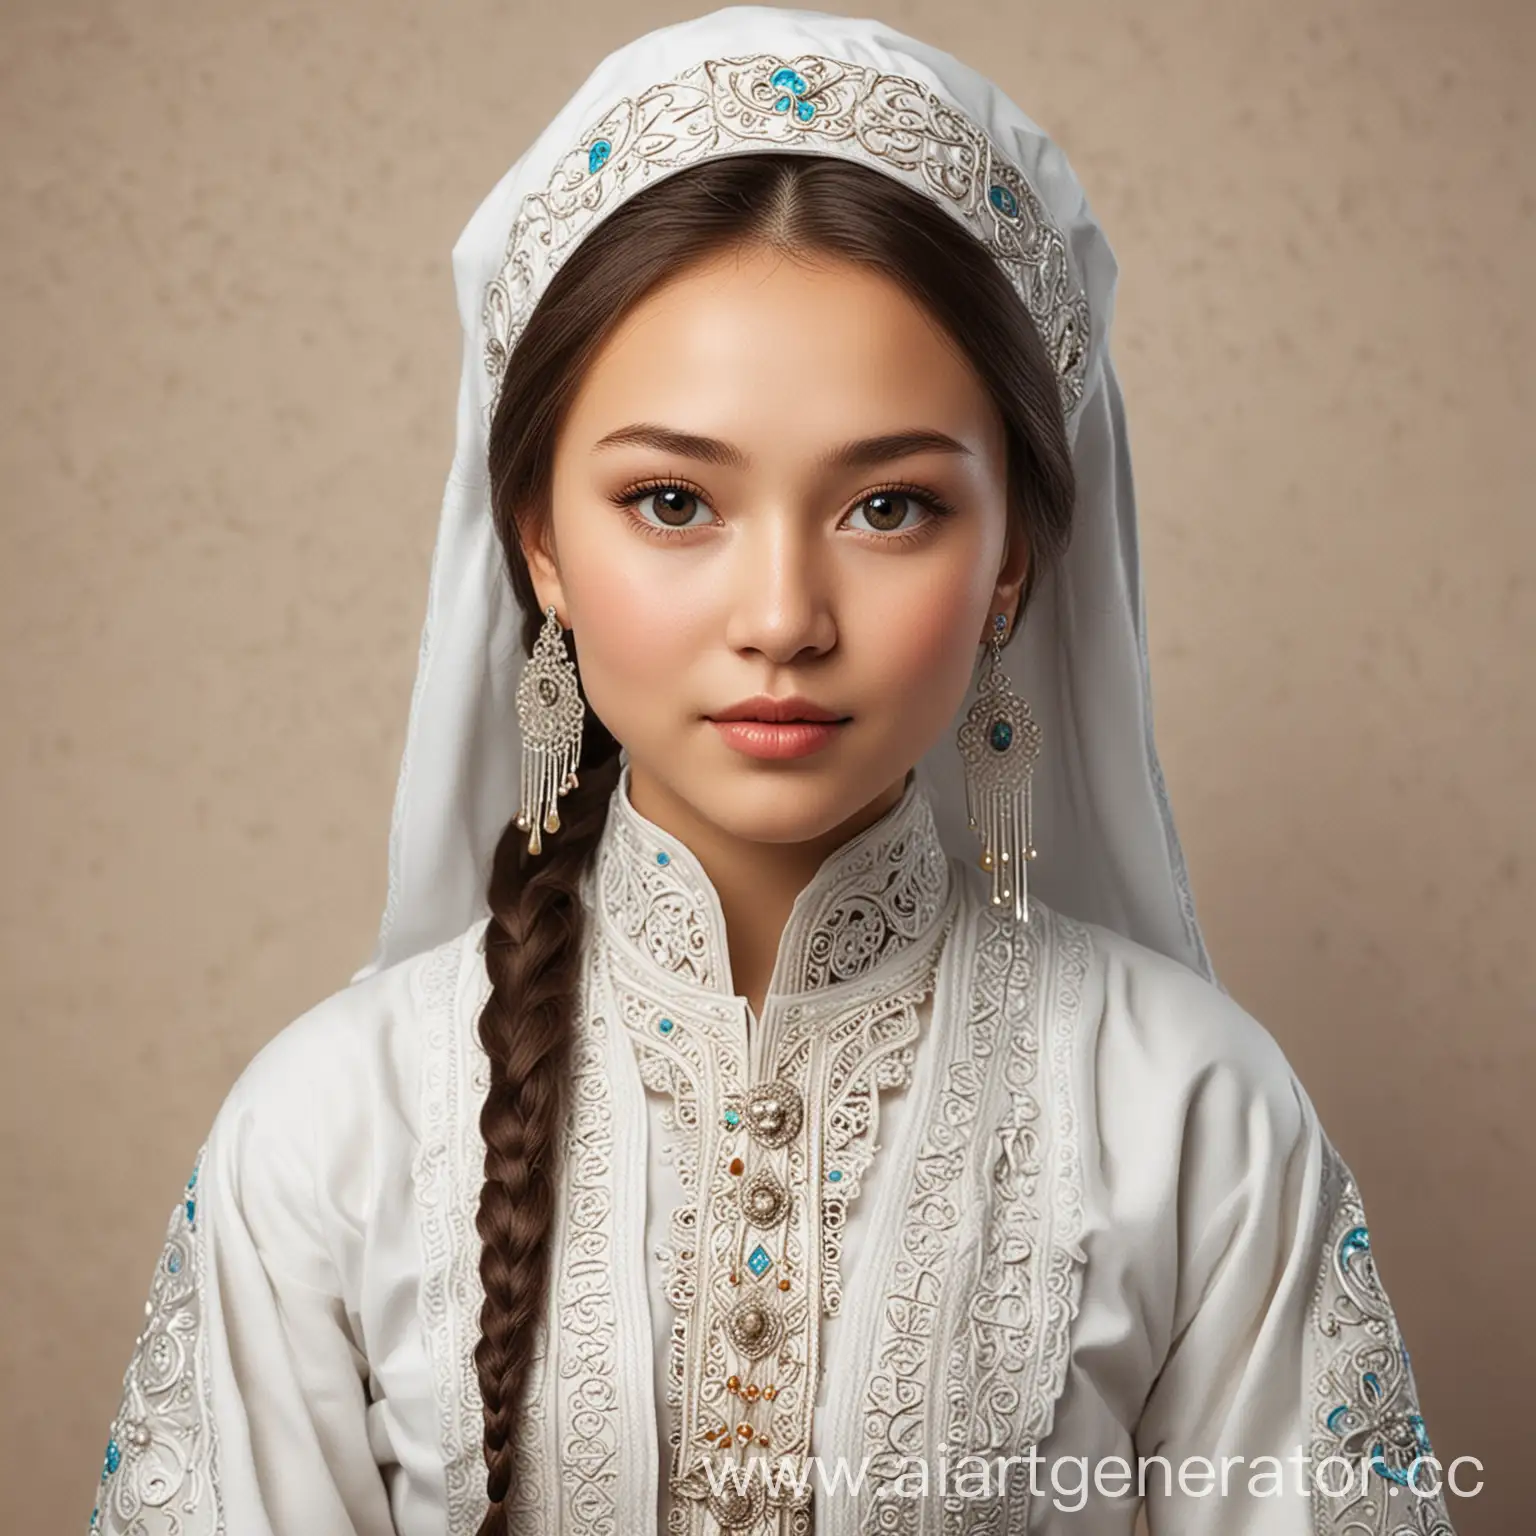 Kazakh-Girl-in-Elegant-Traditional-Attire-Invitations-Design-Inspiration